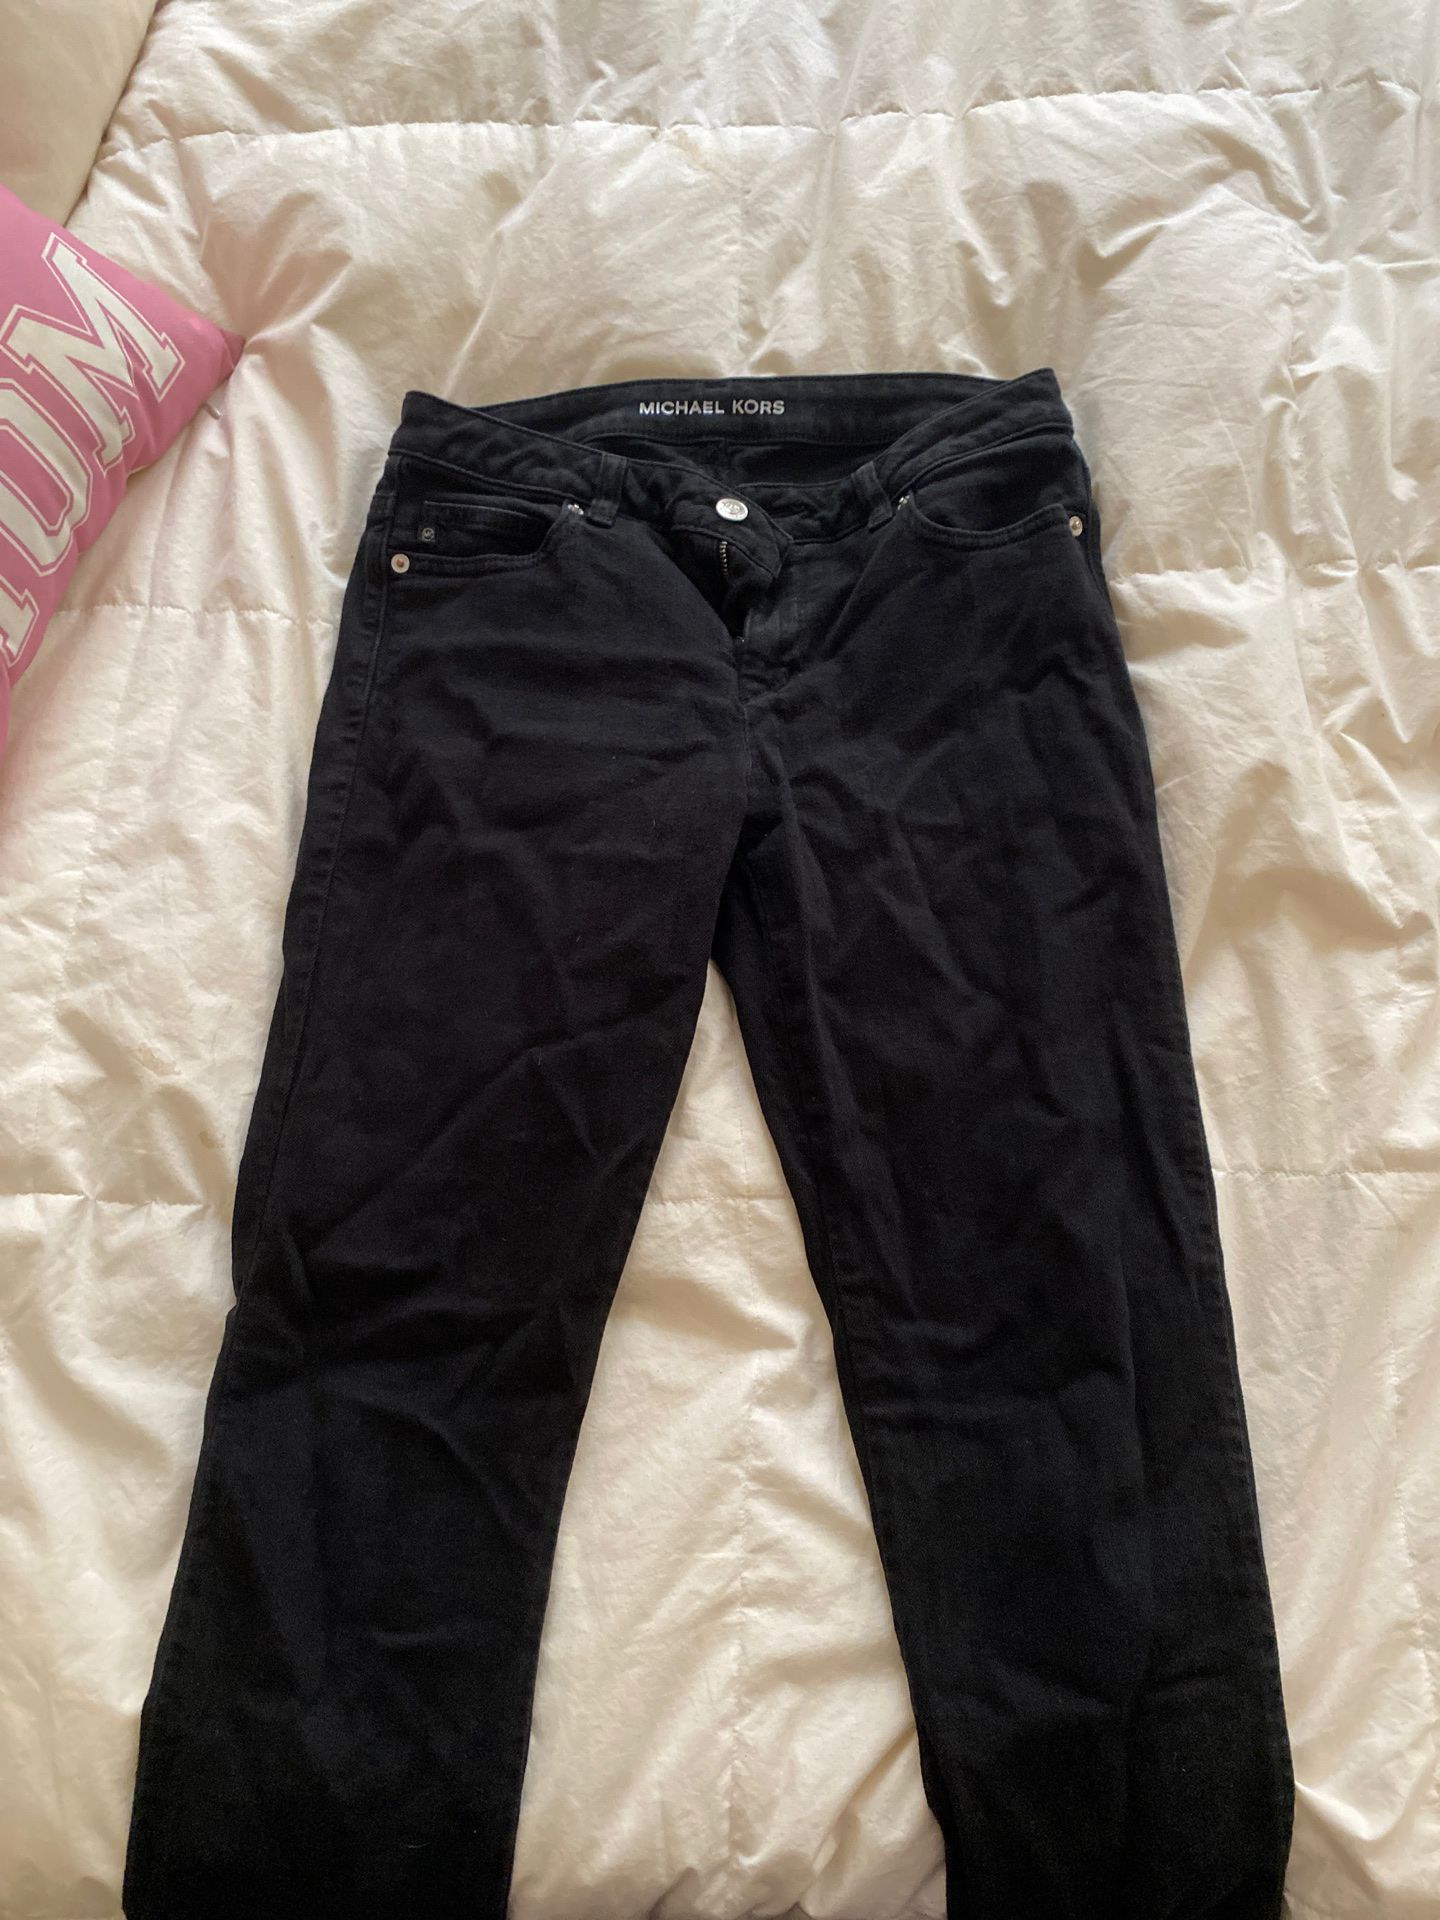 Michael Kors Black Jeans (Size 4)